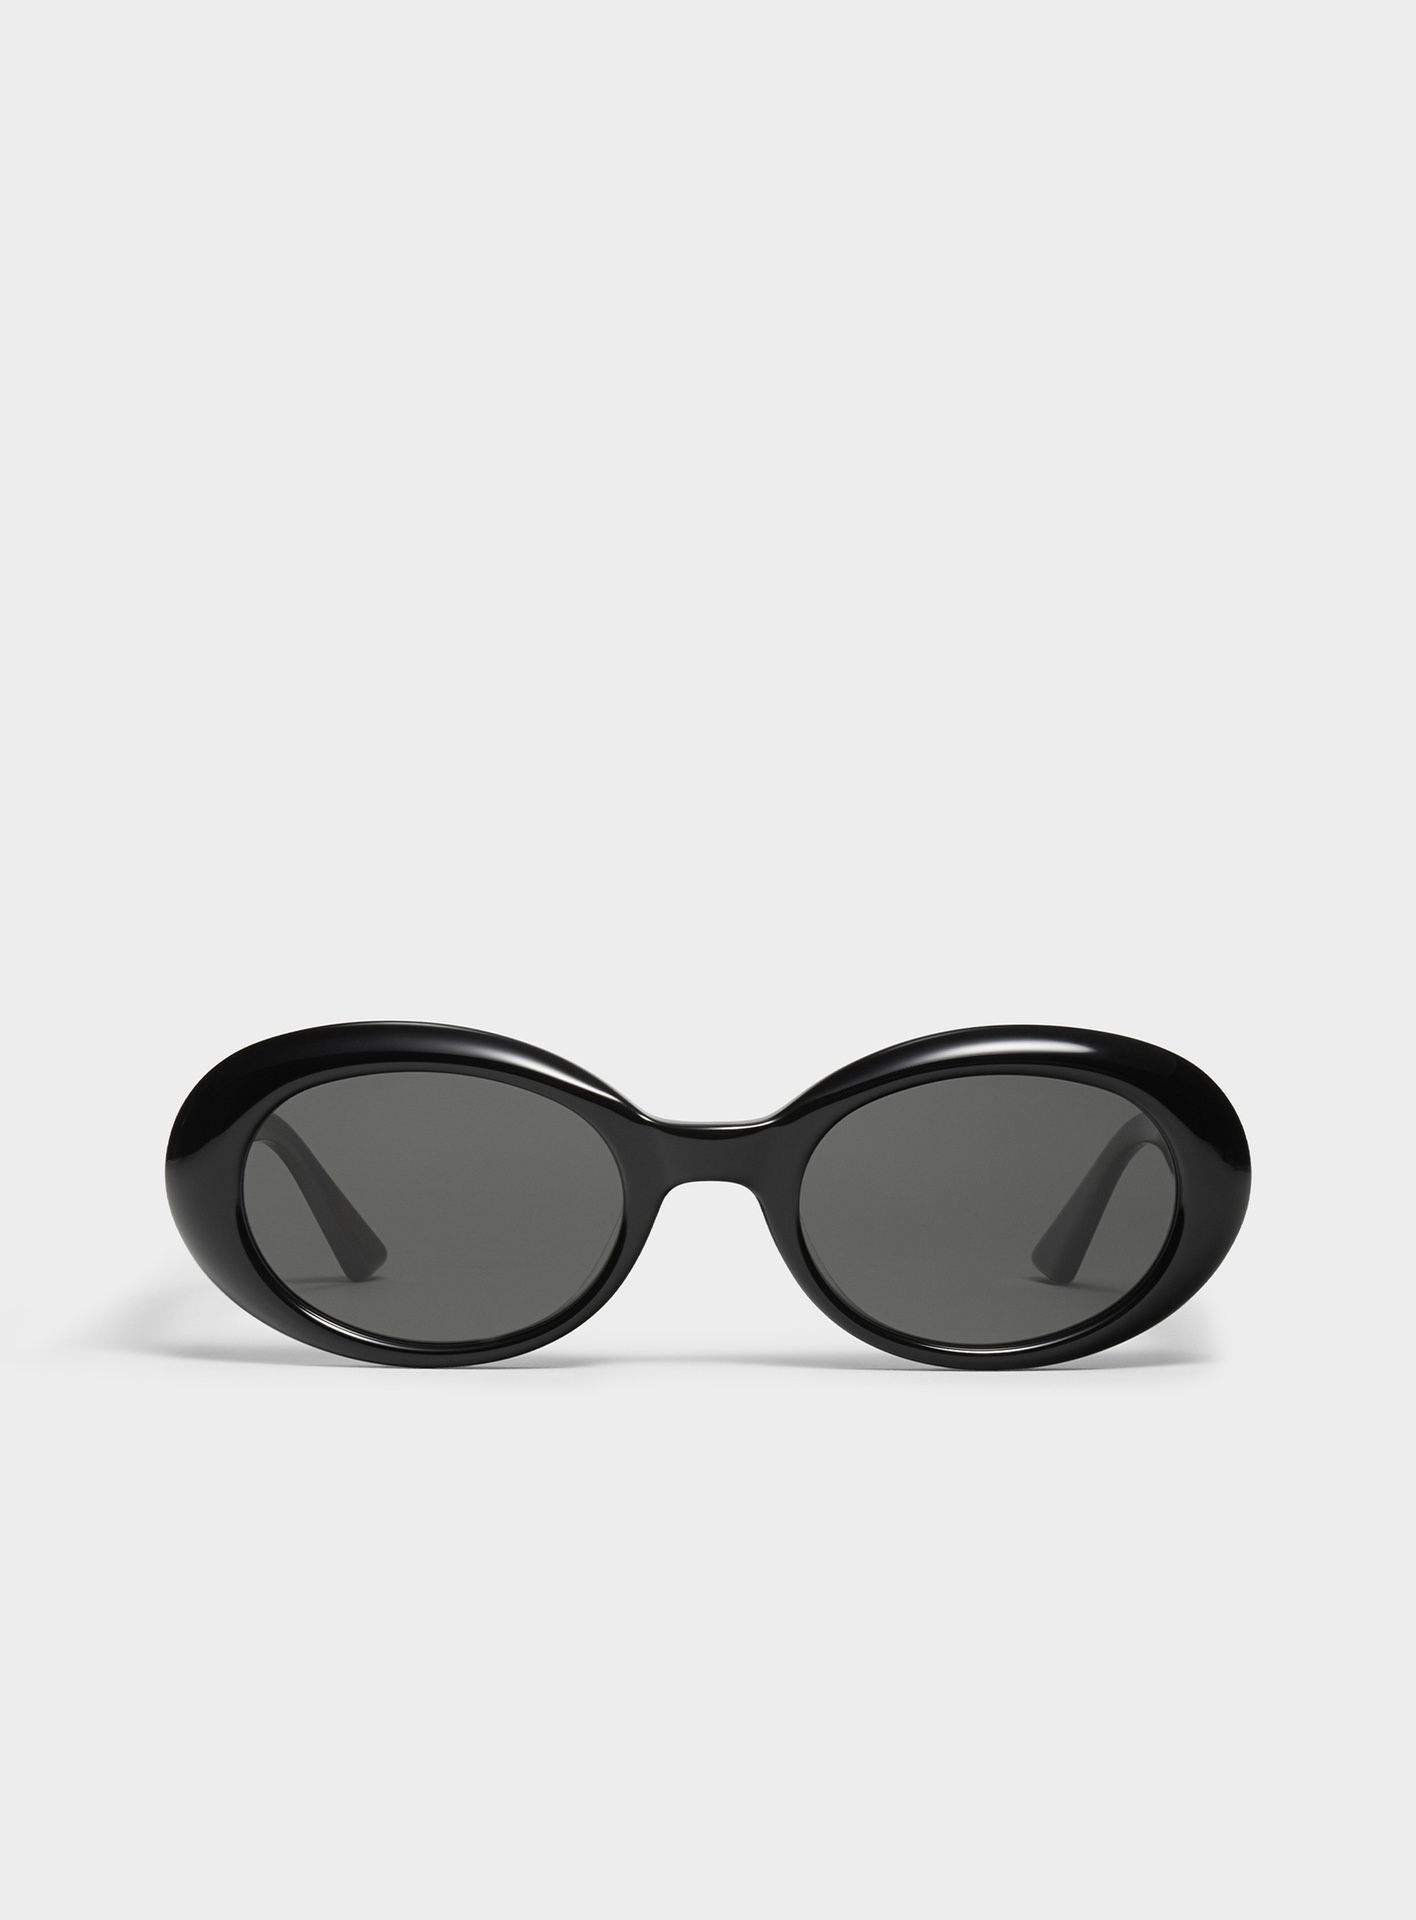 New round sunglasses men designer metal retro sunglasses fashion style square frameless UV 400 lens outdoor protection